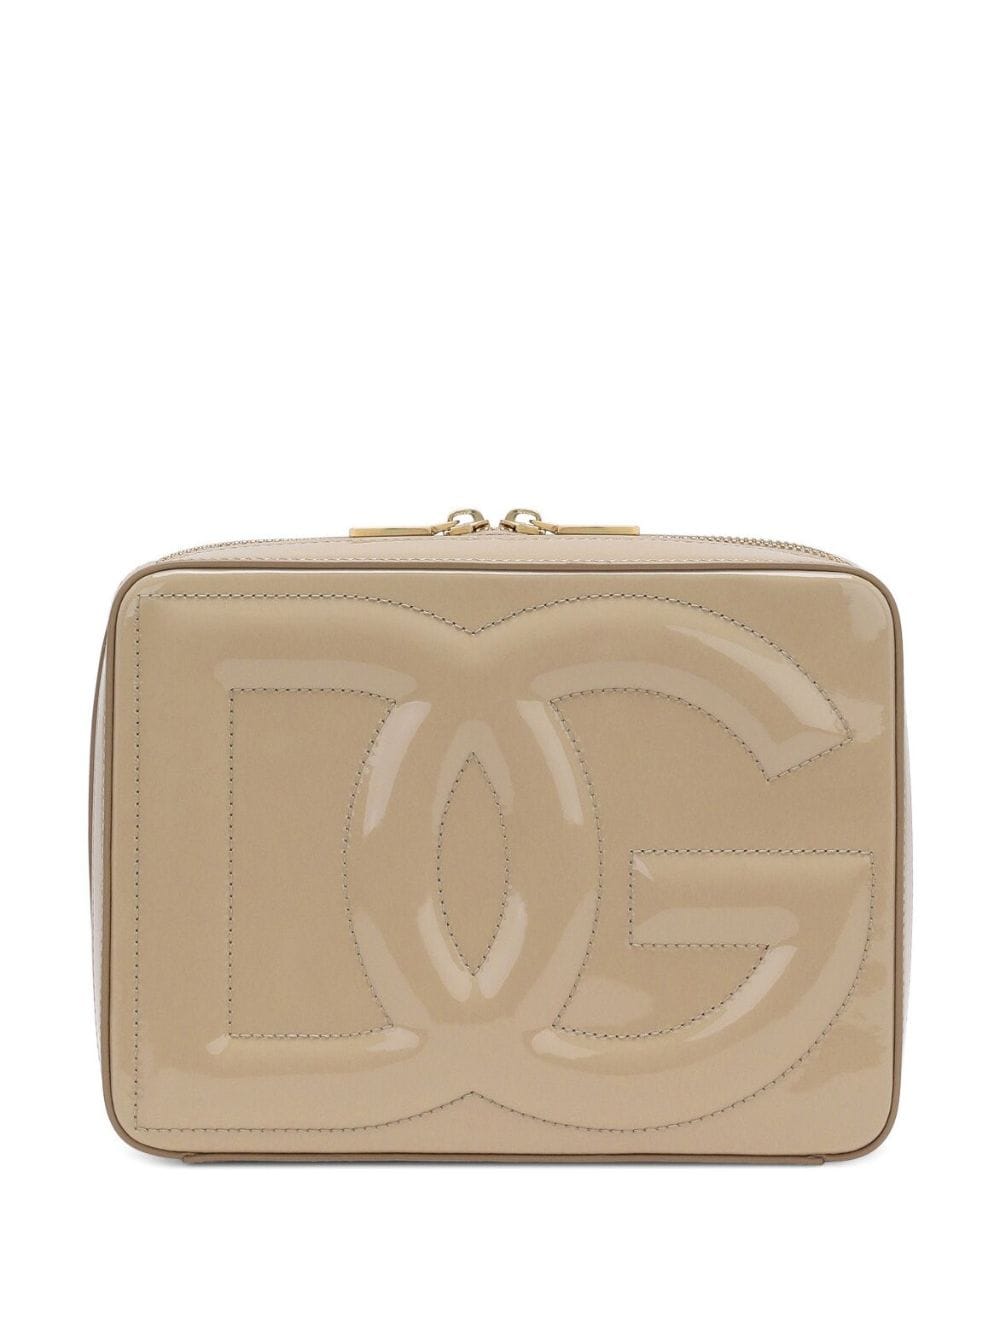 Dolce & Gabbana Dg Logo Patent Leather Camera Bag In Neutrals